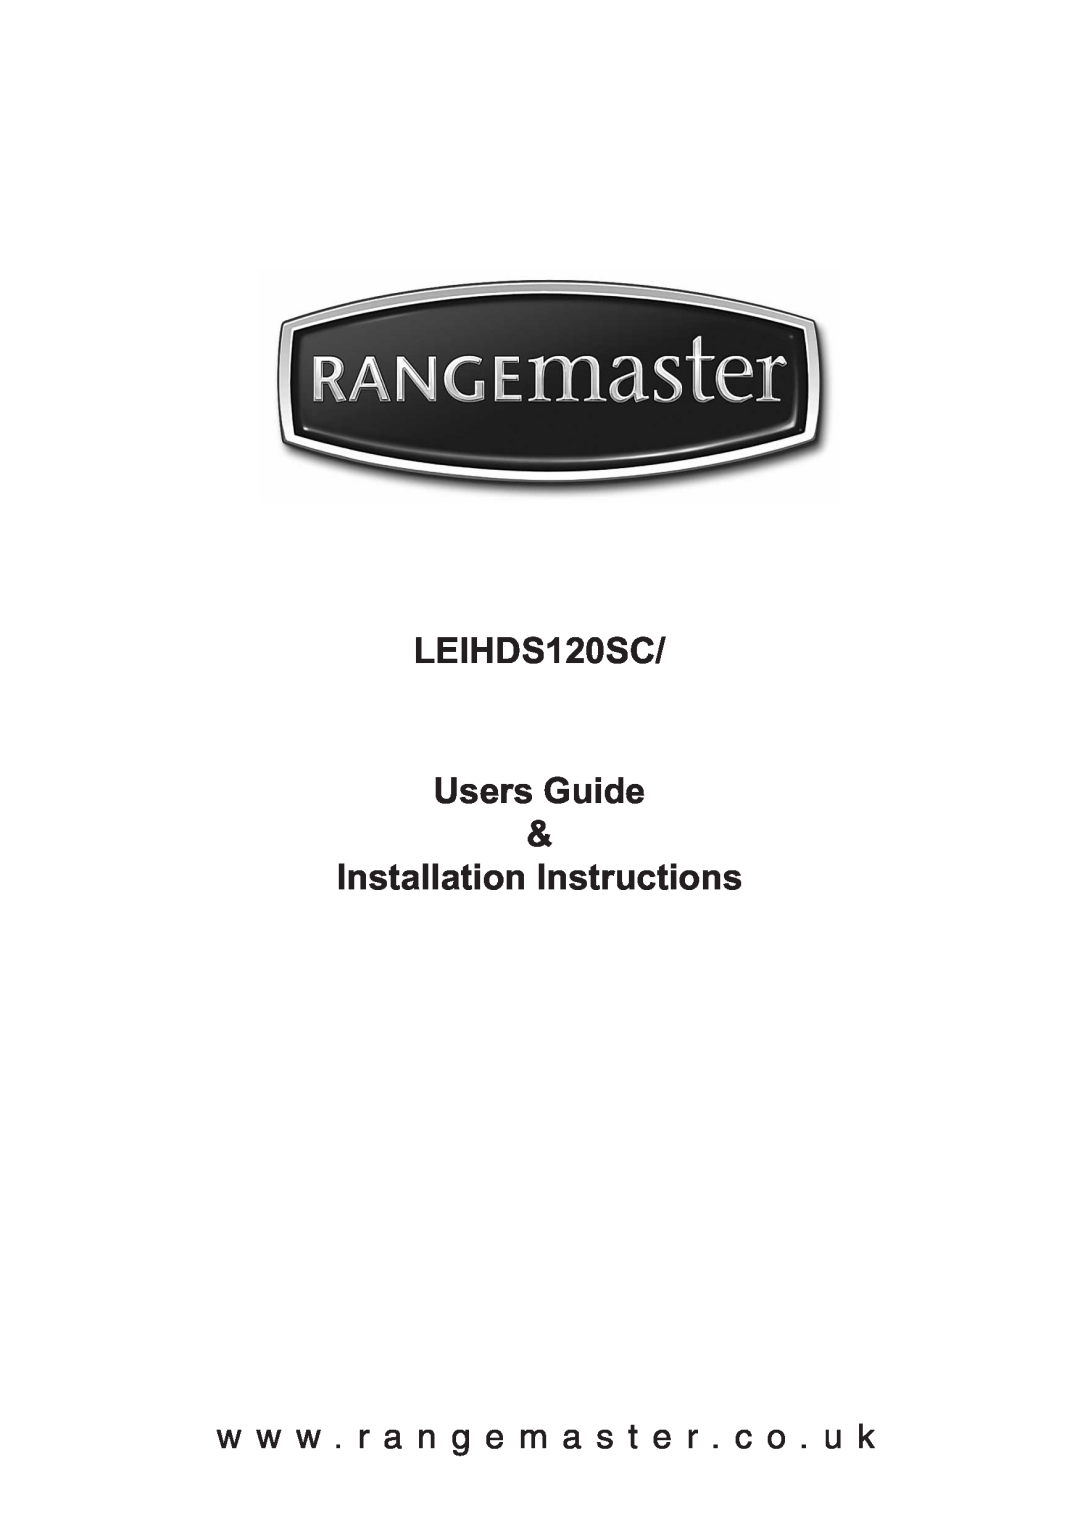 Rangemaster installation instructions LEIHDS120SC Users Guide, Installation Instructions 